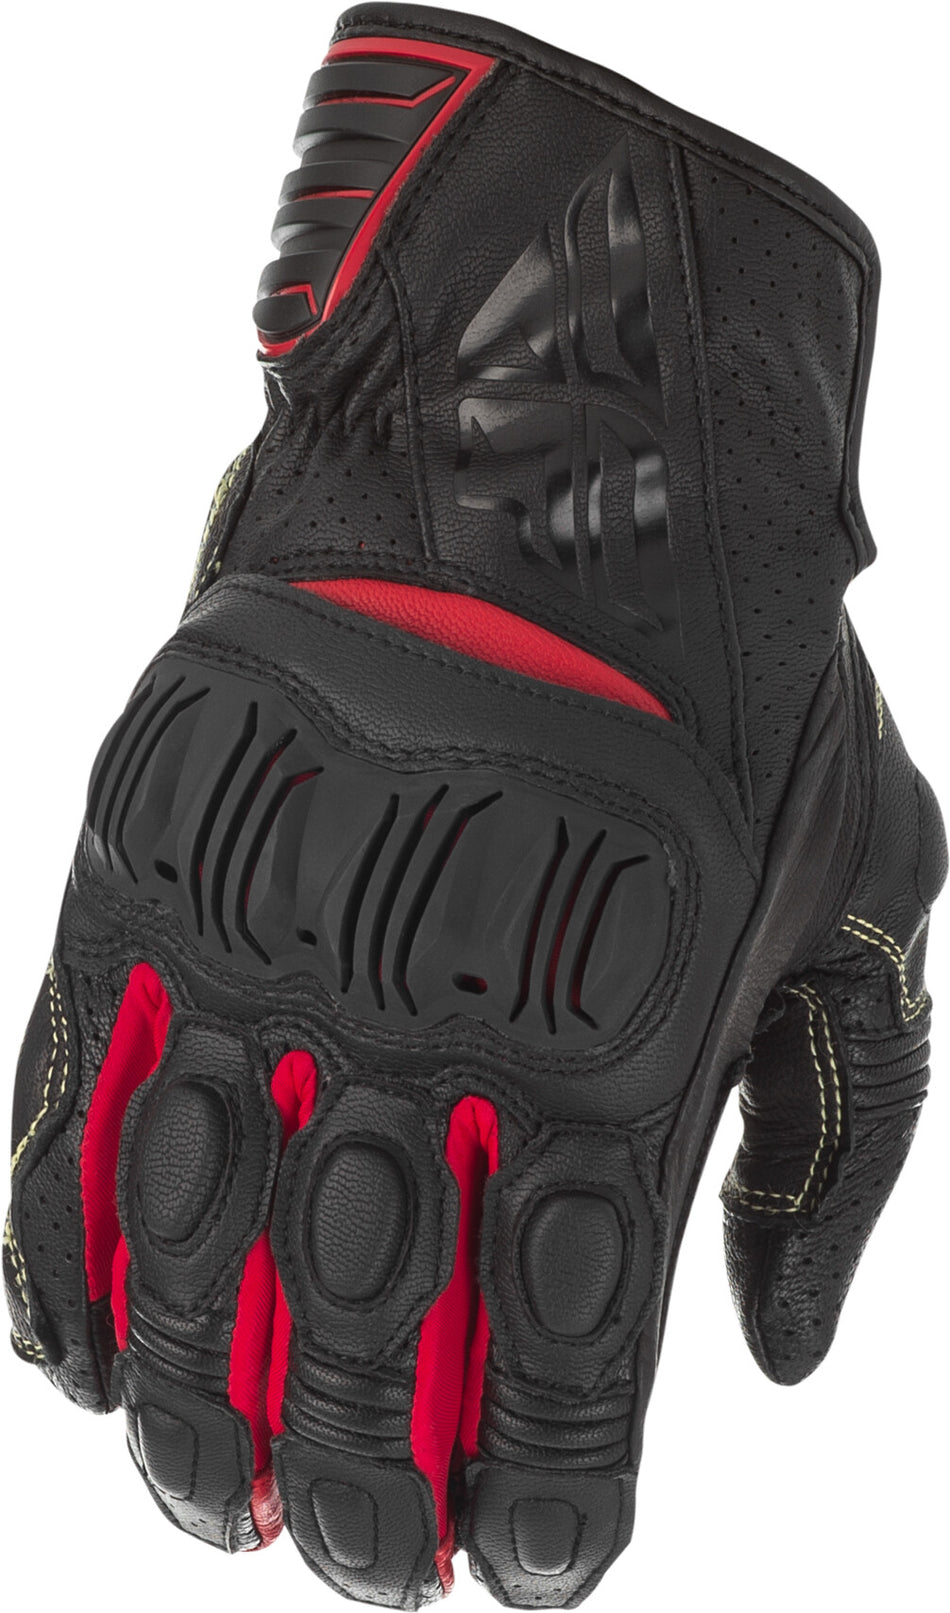 FLY RACING Brawler Gloves Black/Red Lg 476-2092L